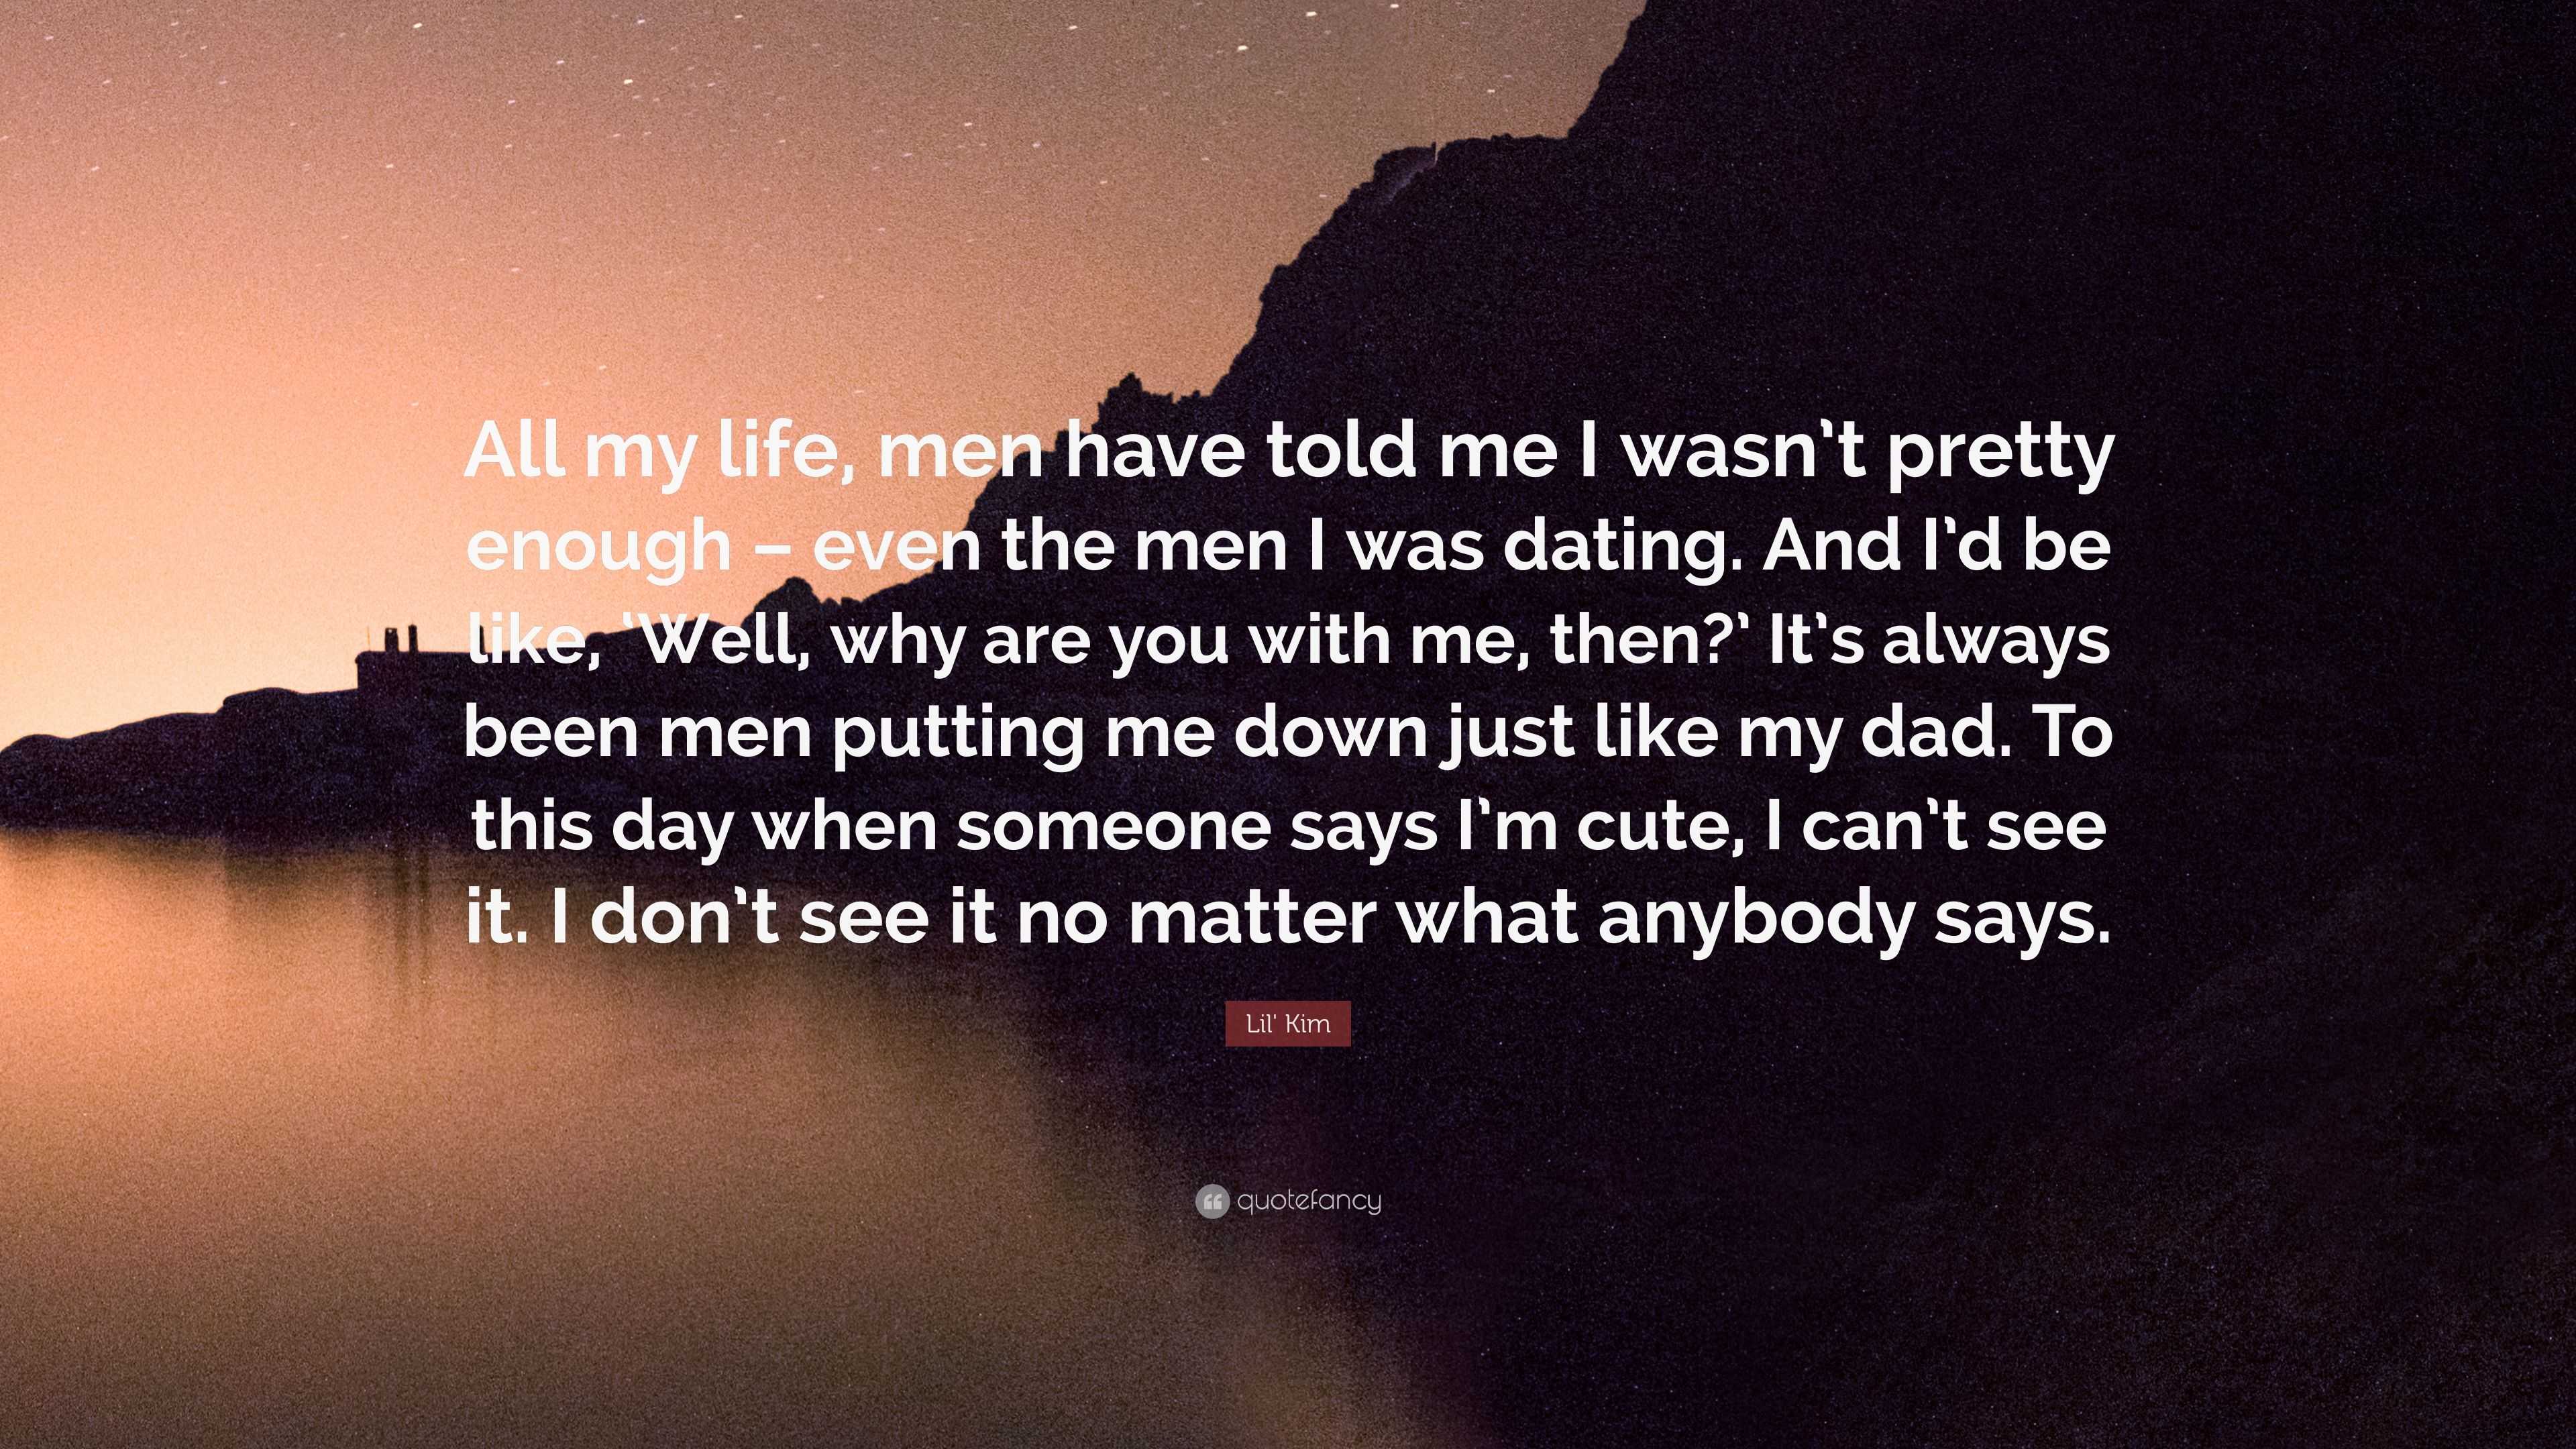 Lil' Kim Quote: “All my life, men have told me I wasn't pretty